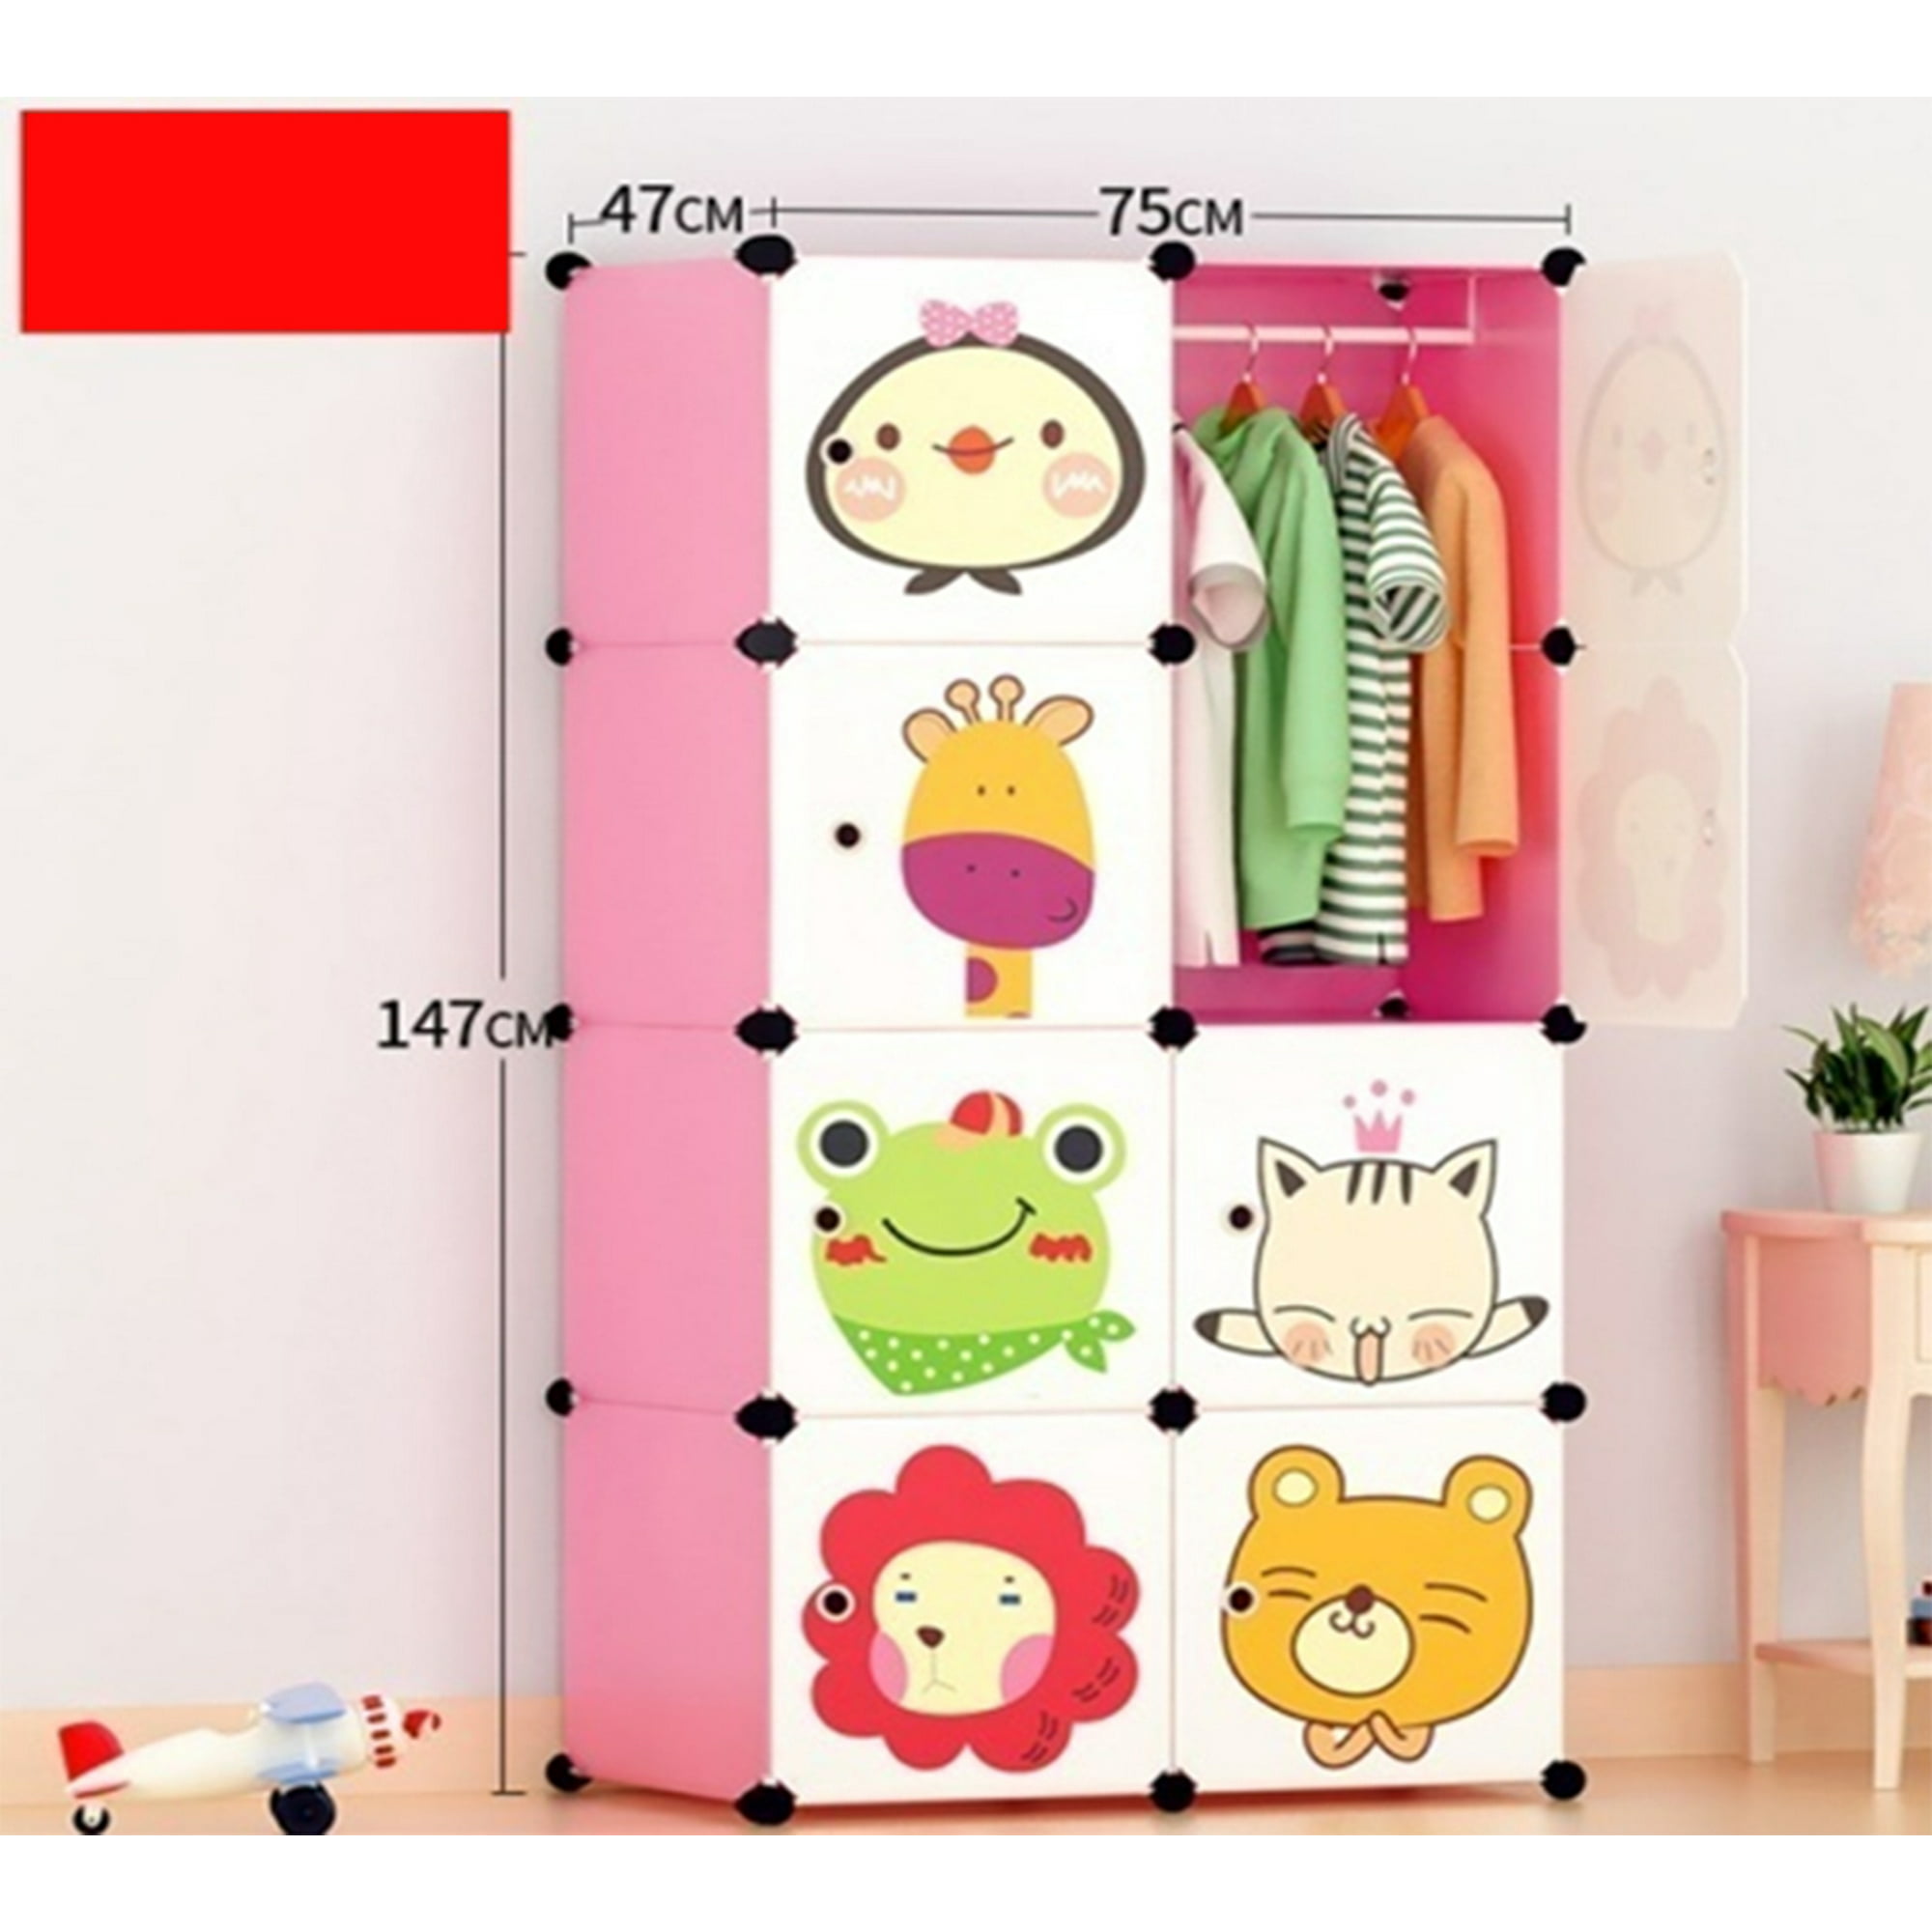 Toytexx Portable Diy Closet Cabinet Wardrobe For Children And Kids